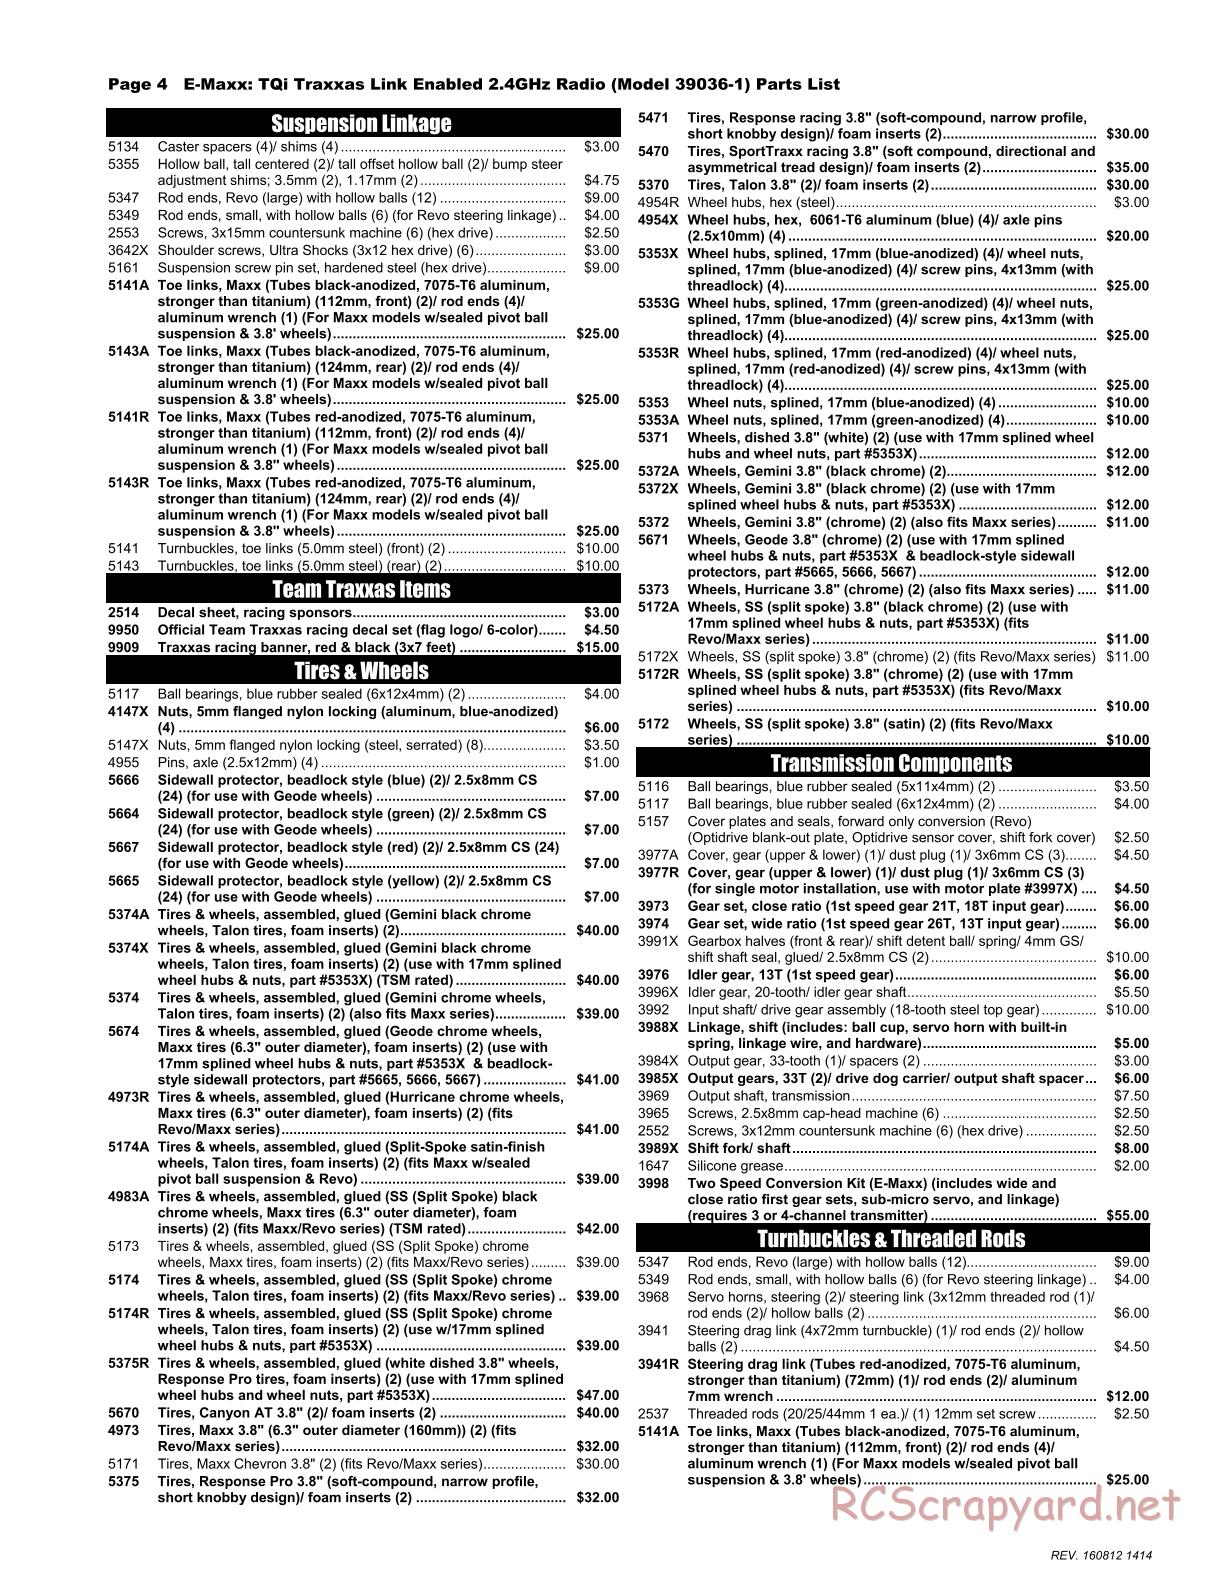 Traxxas - E-Maxx (2015) - Parts List - Page 4